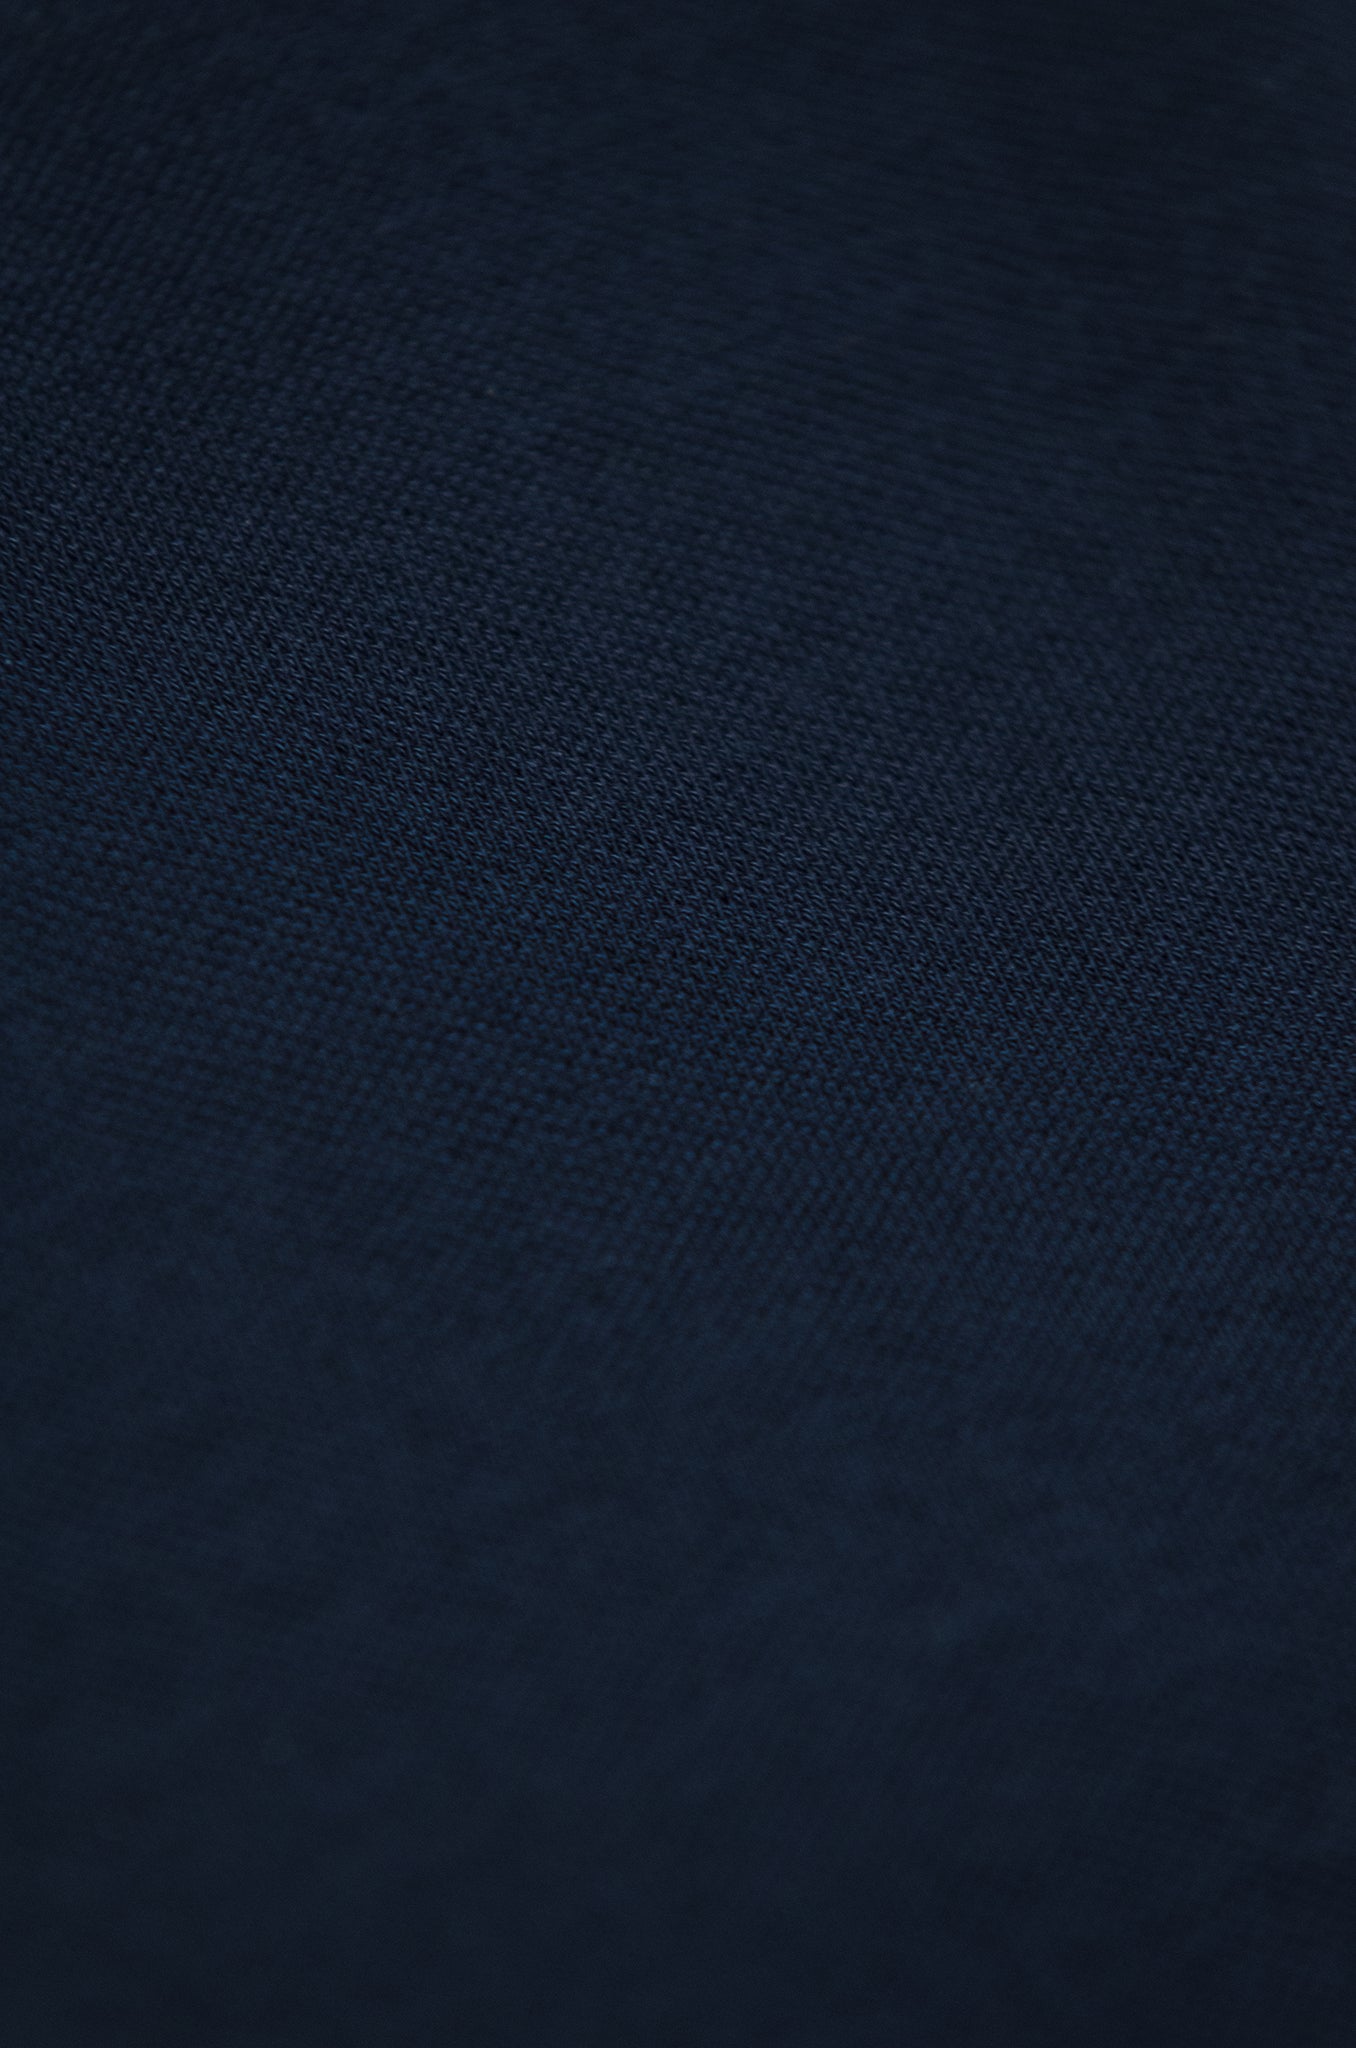 Martin short-sleeved polo in compact-fine piquet (dark blue)